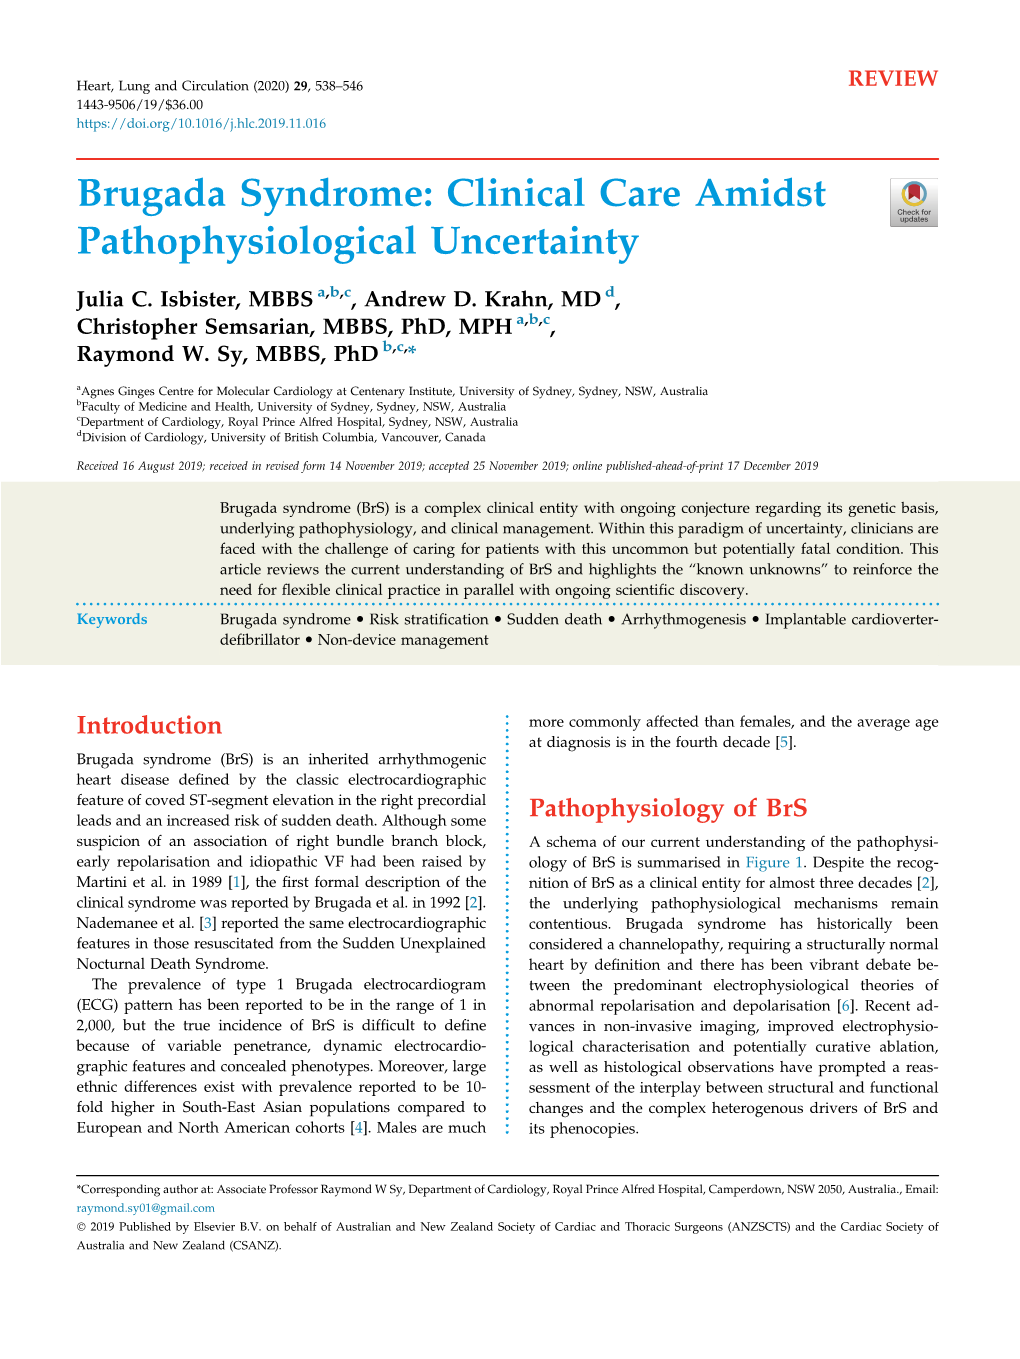 Brugada Syndrome: Clinical Care Amidst Pathophysiological Uncertainty